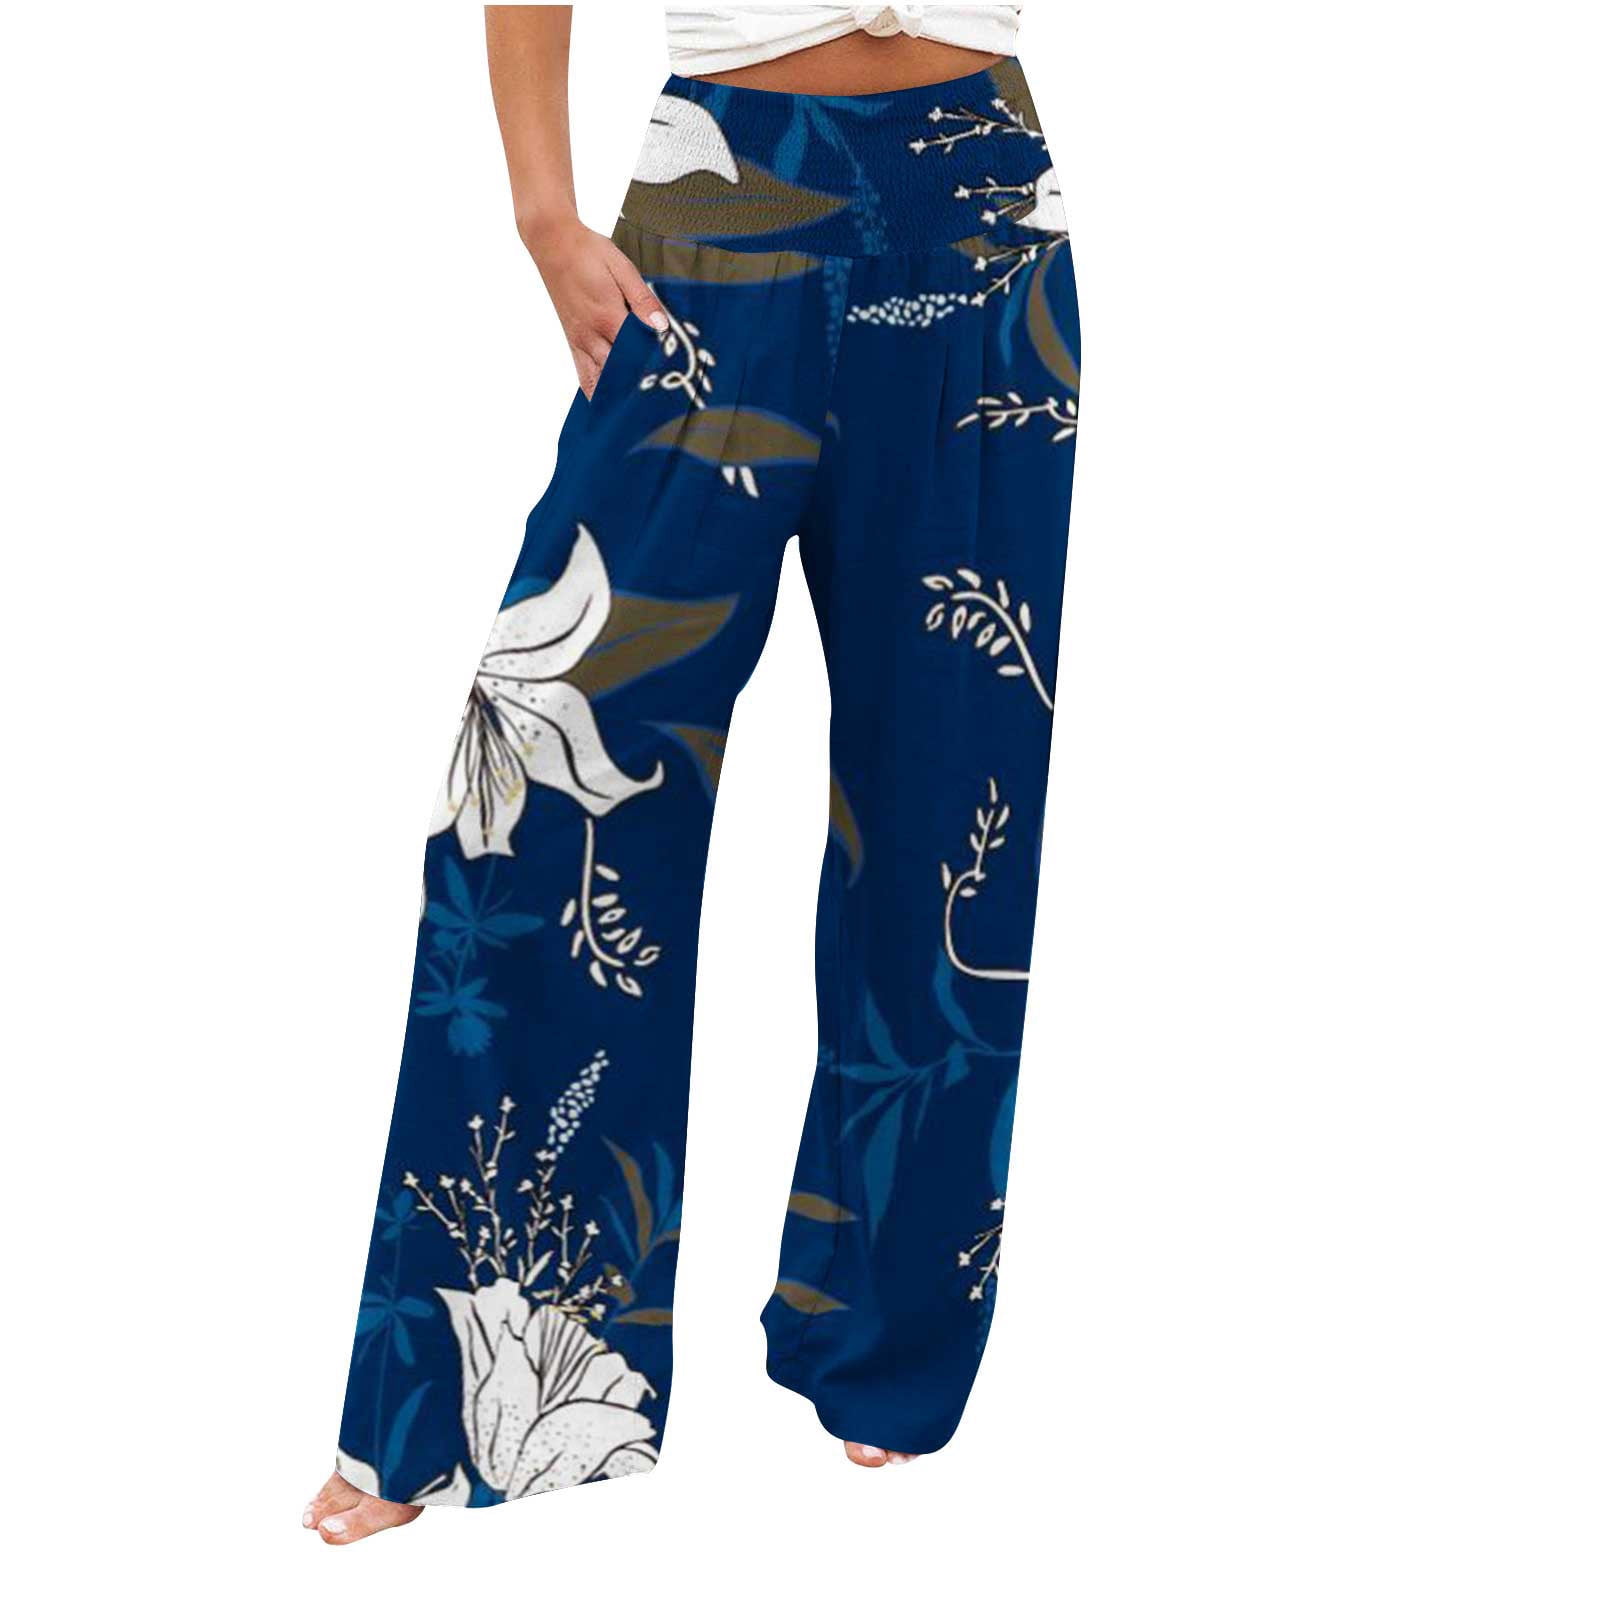 KIHOUT Women's Comfortable Printed High Waist Leisure Pants